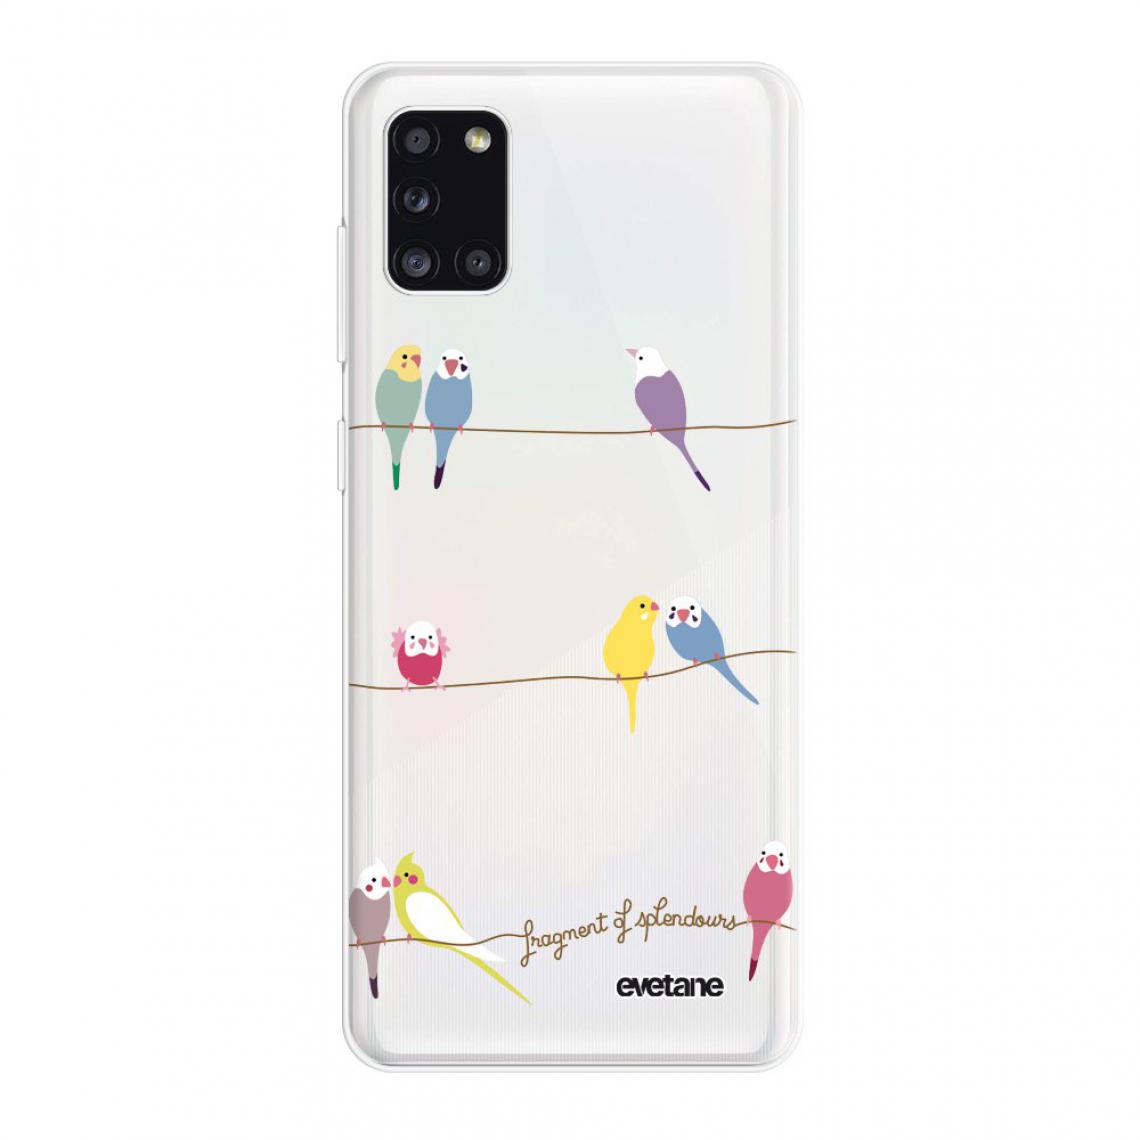 Evetane - Coque Samsung Galaxy A31 360 intégrale avant arrière transparente - Coque, étui smartphone